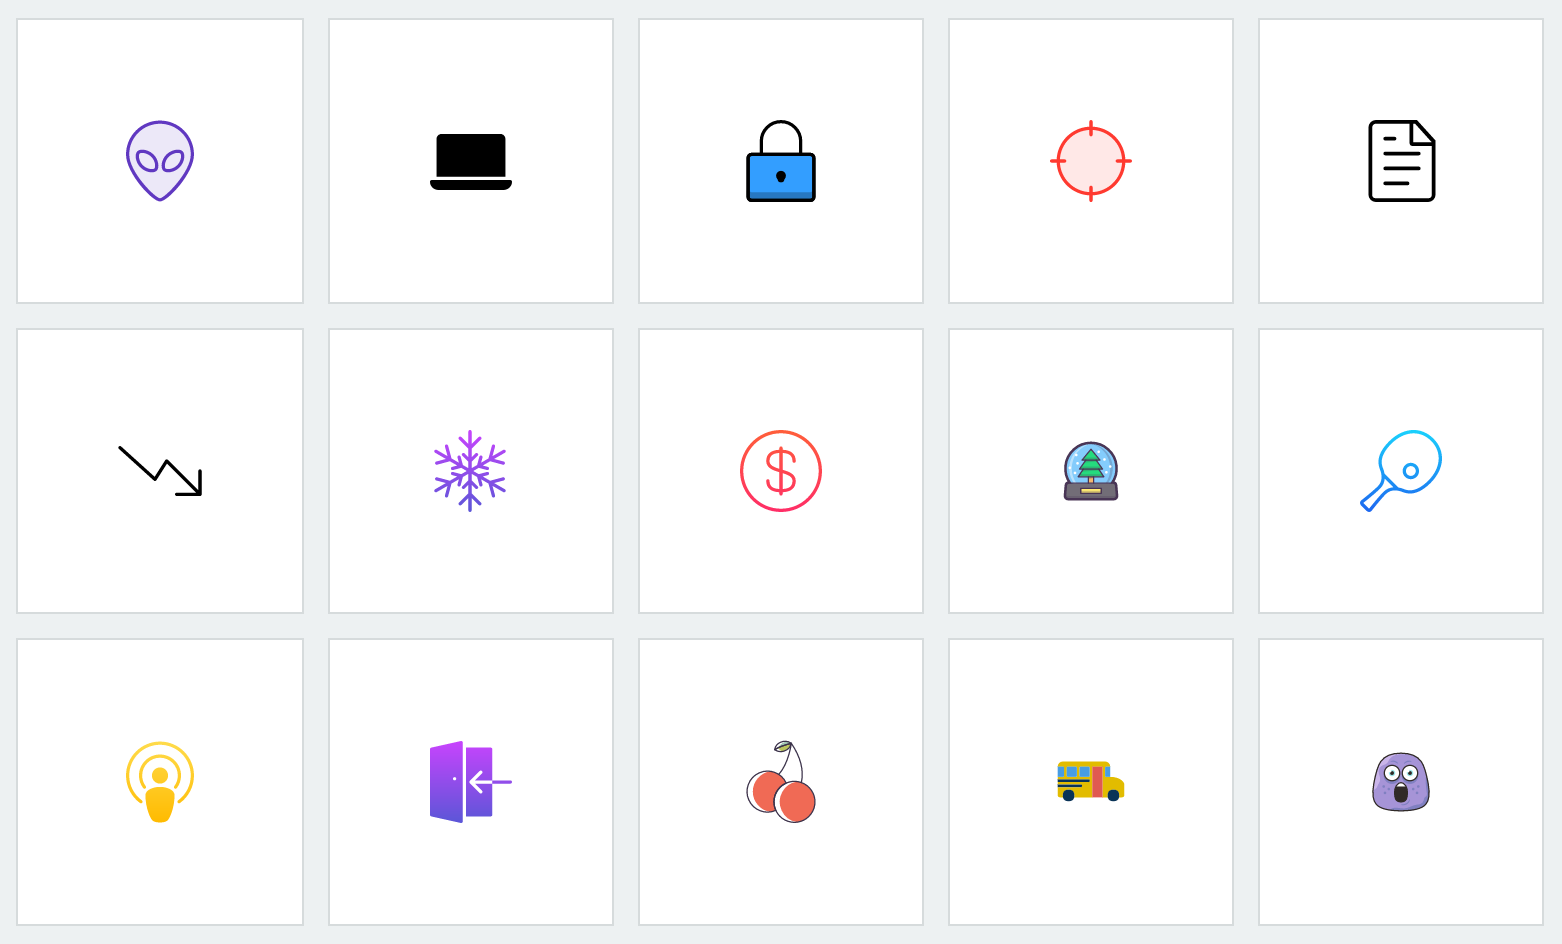 Free Icons from Stockio